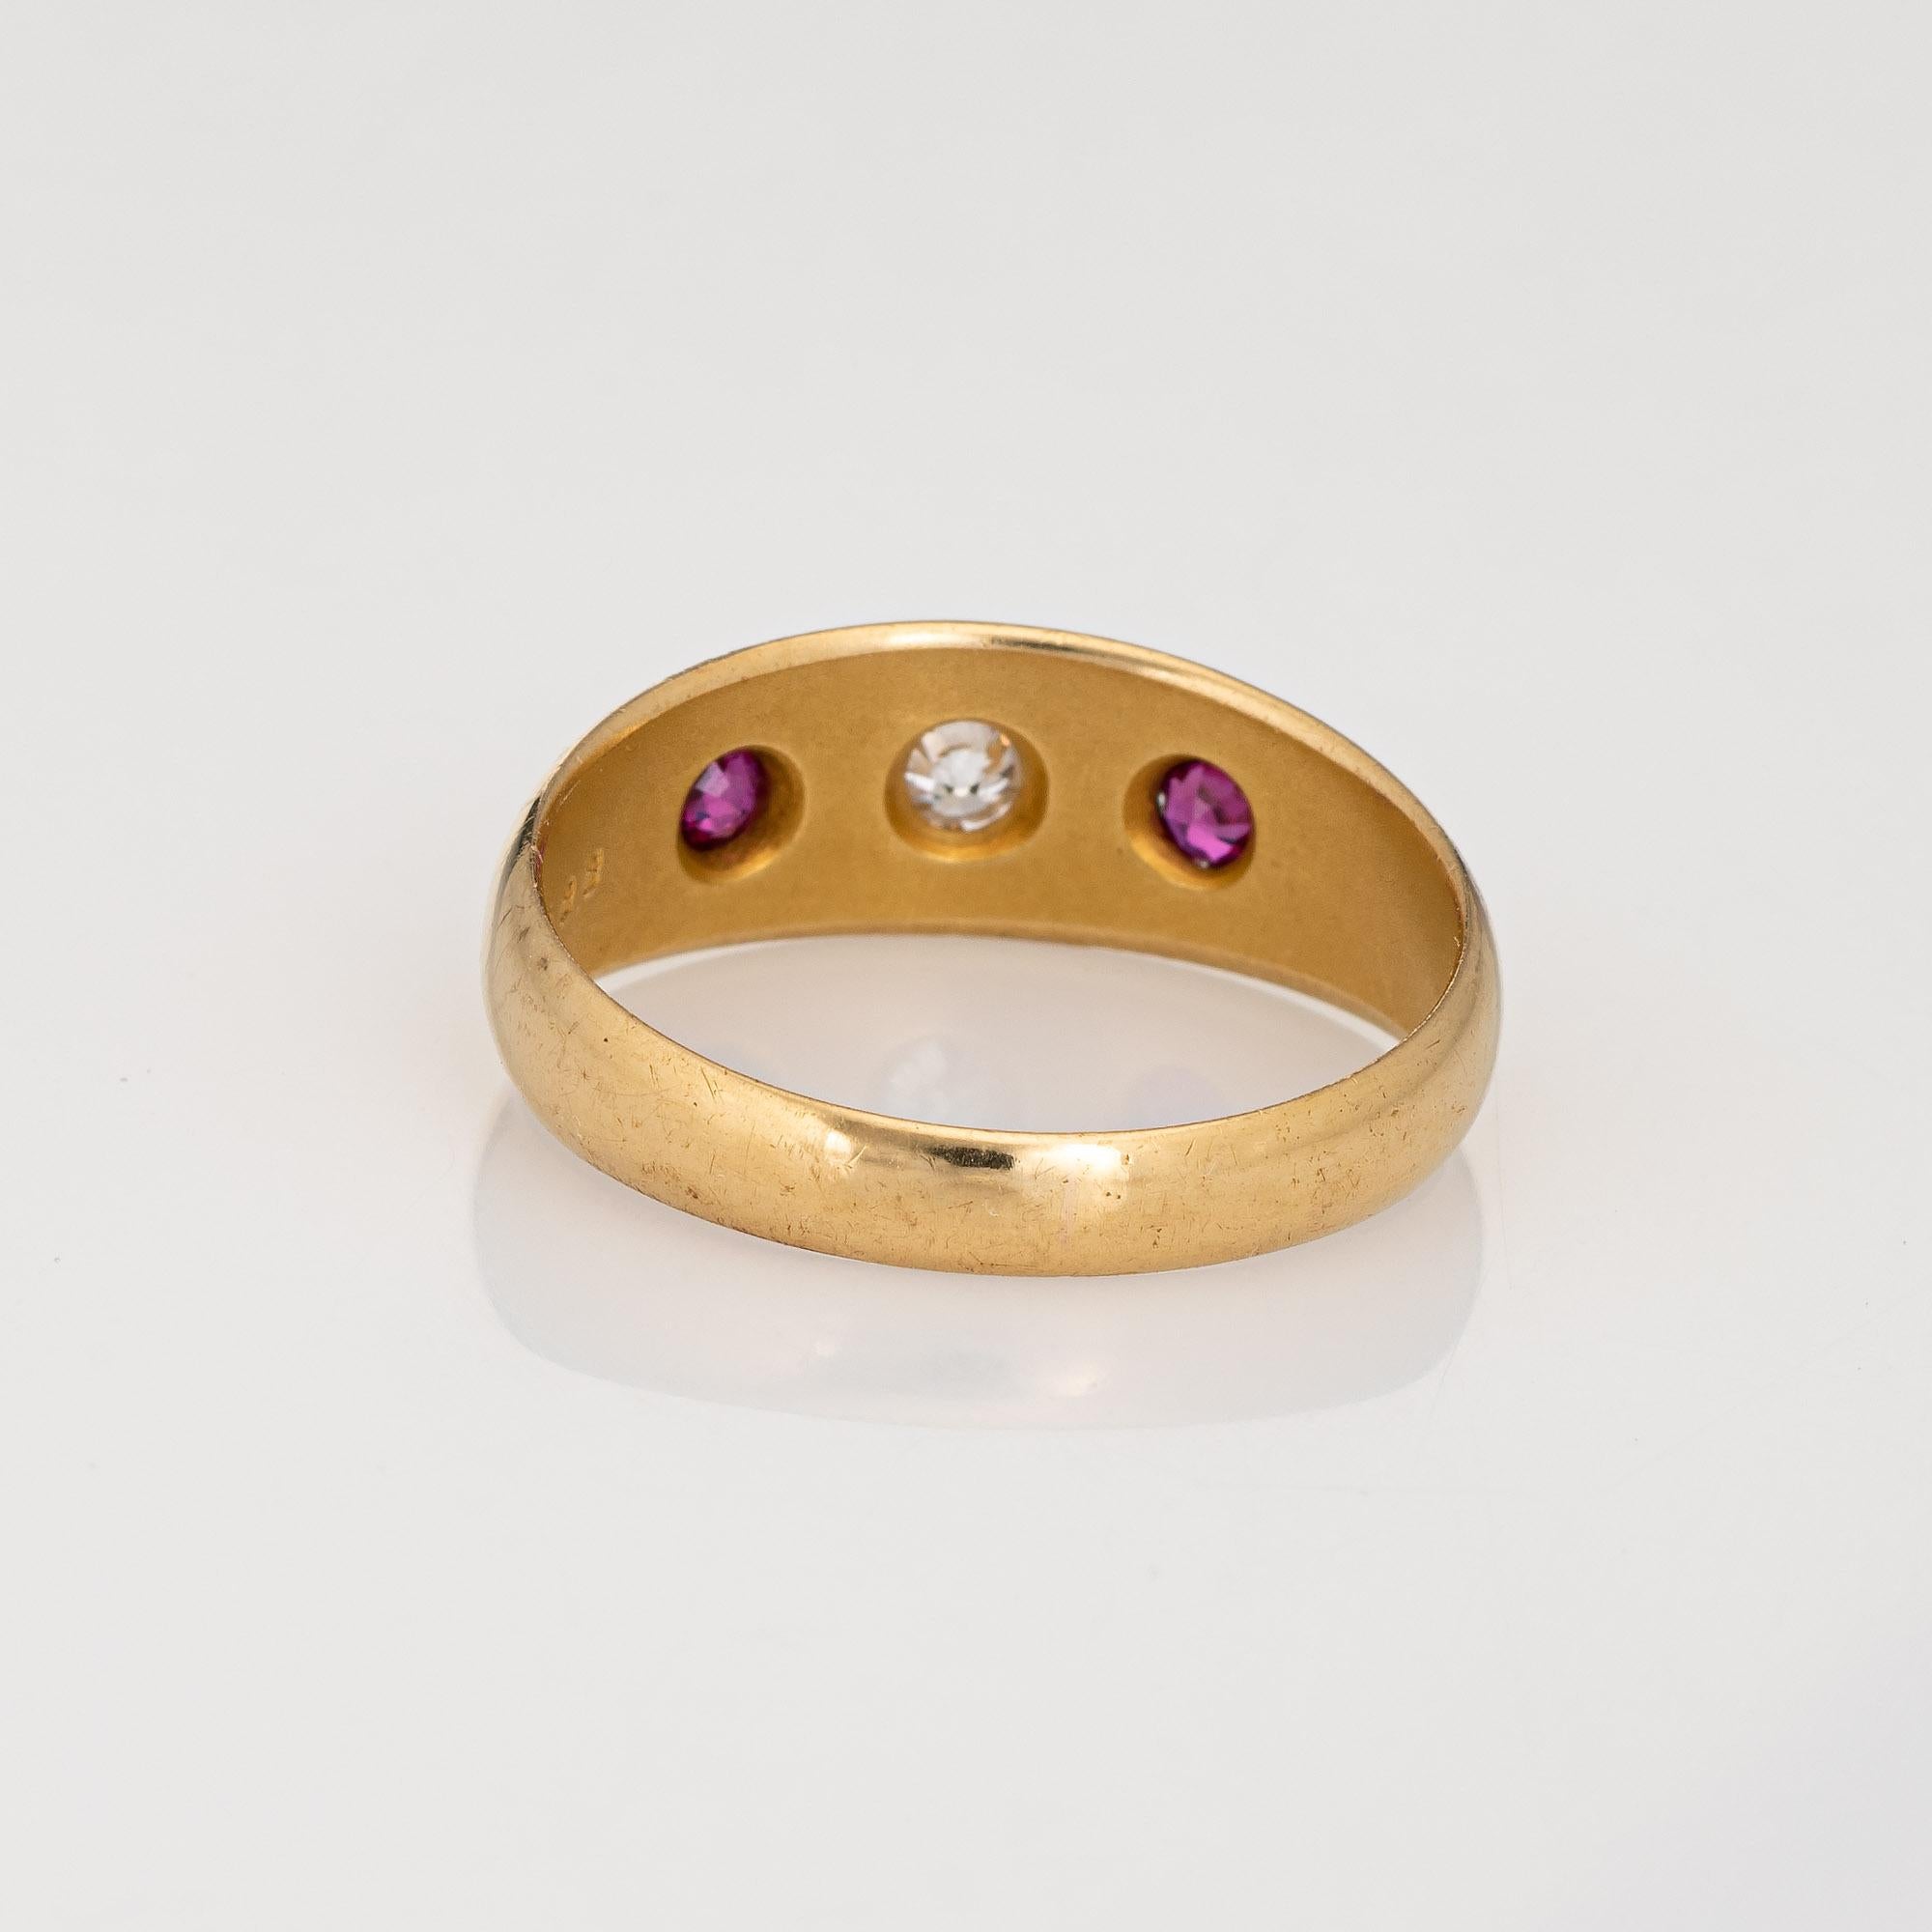 Women's Antique Edwardian Ring c1912 Diamond Ruby Gypsy Band 18k Gold Jewelry